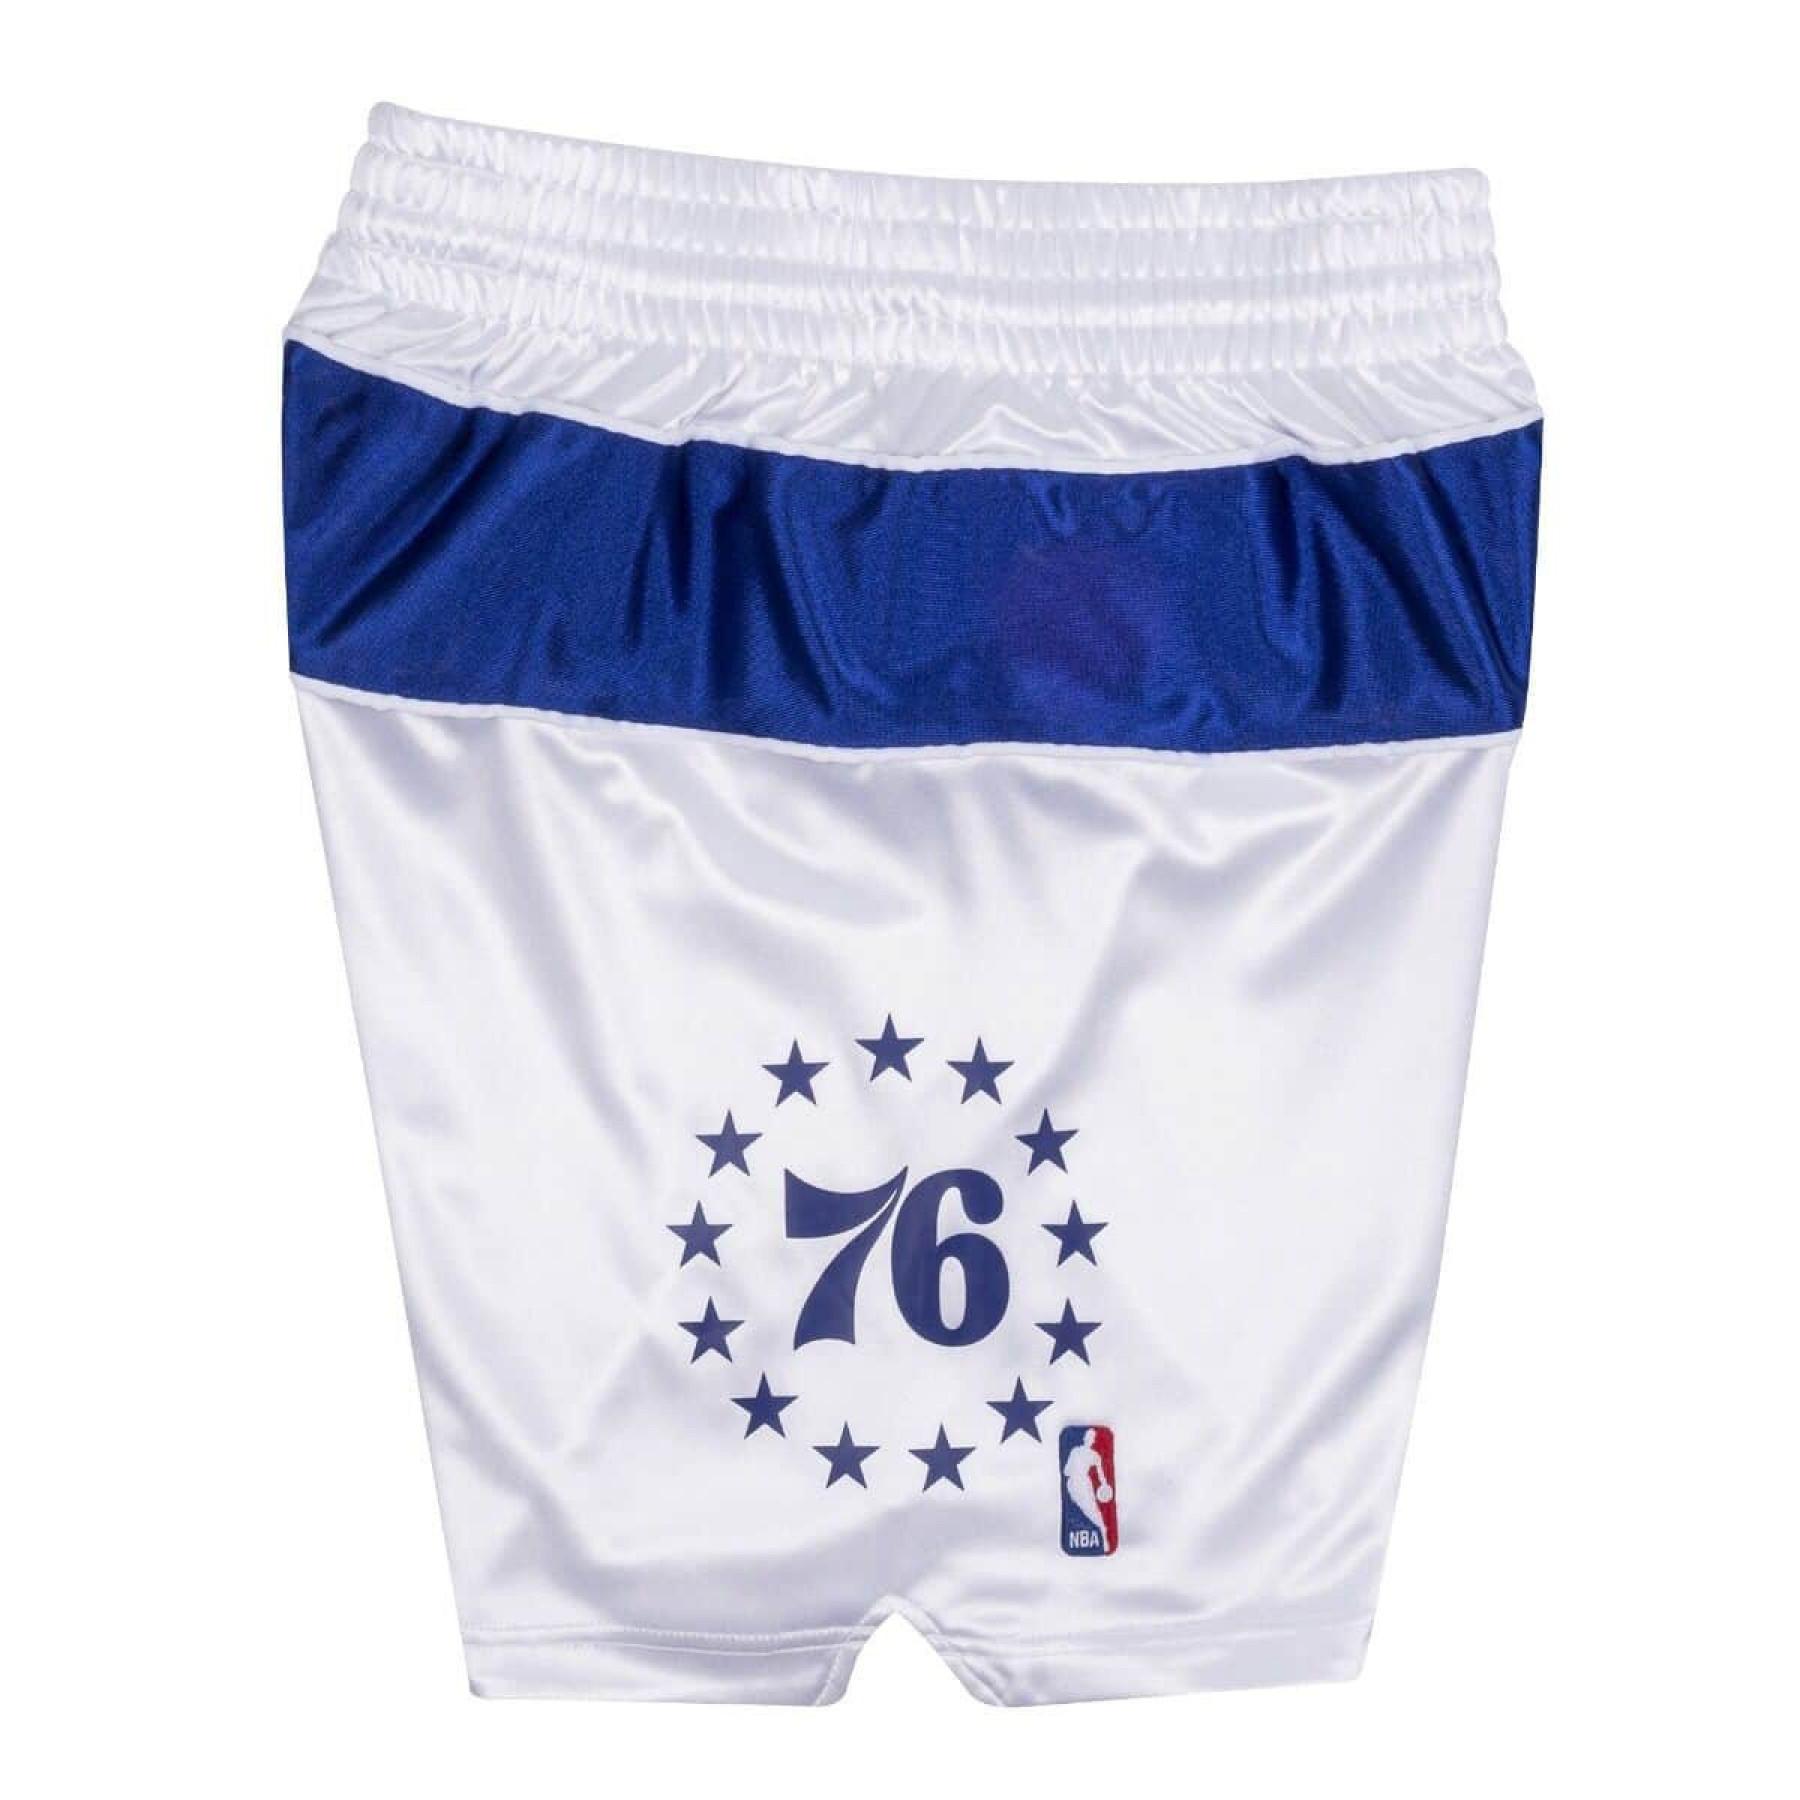 Authentische Shorts Philadelphia 76ers alternate 2003/04